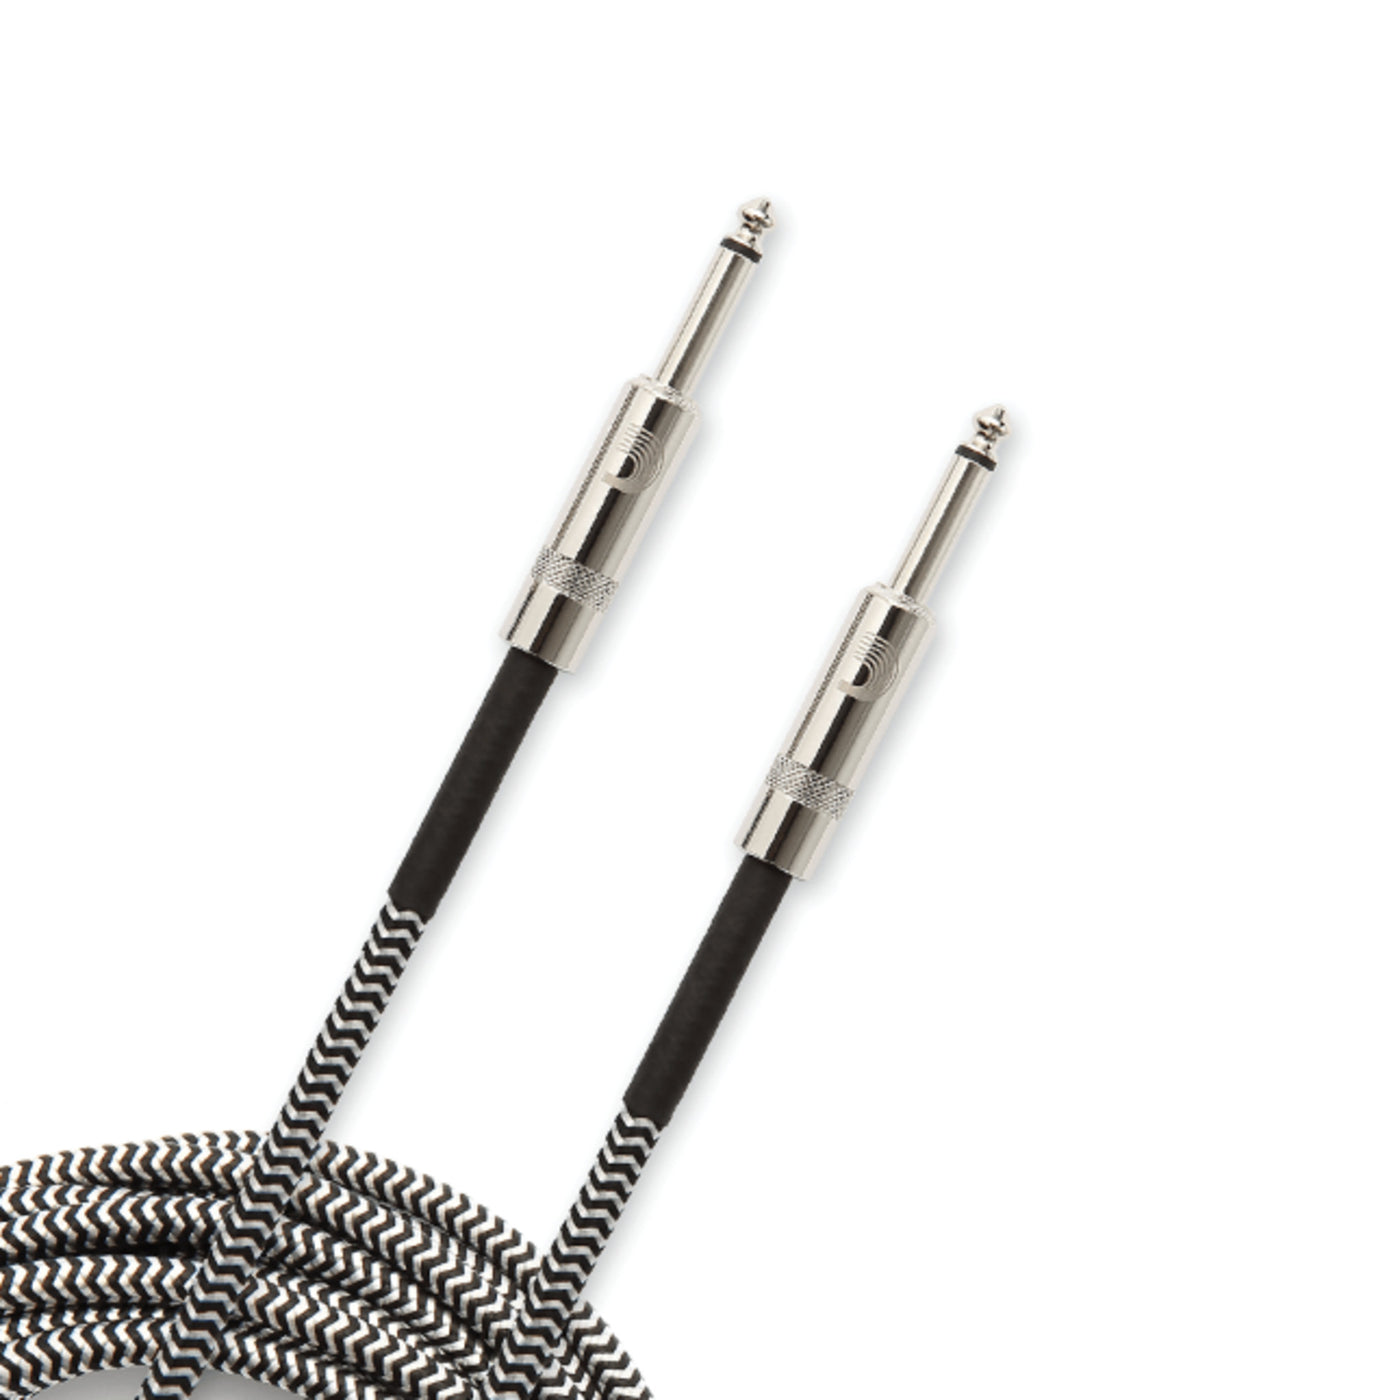 D'Addario Custom Series Braided Instrument Cable, Grey, 10' (PW-BG-10BG)